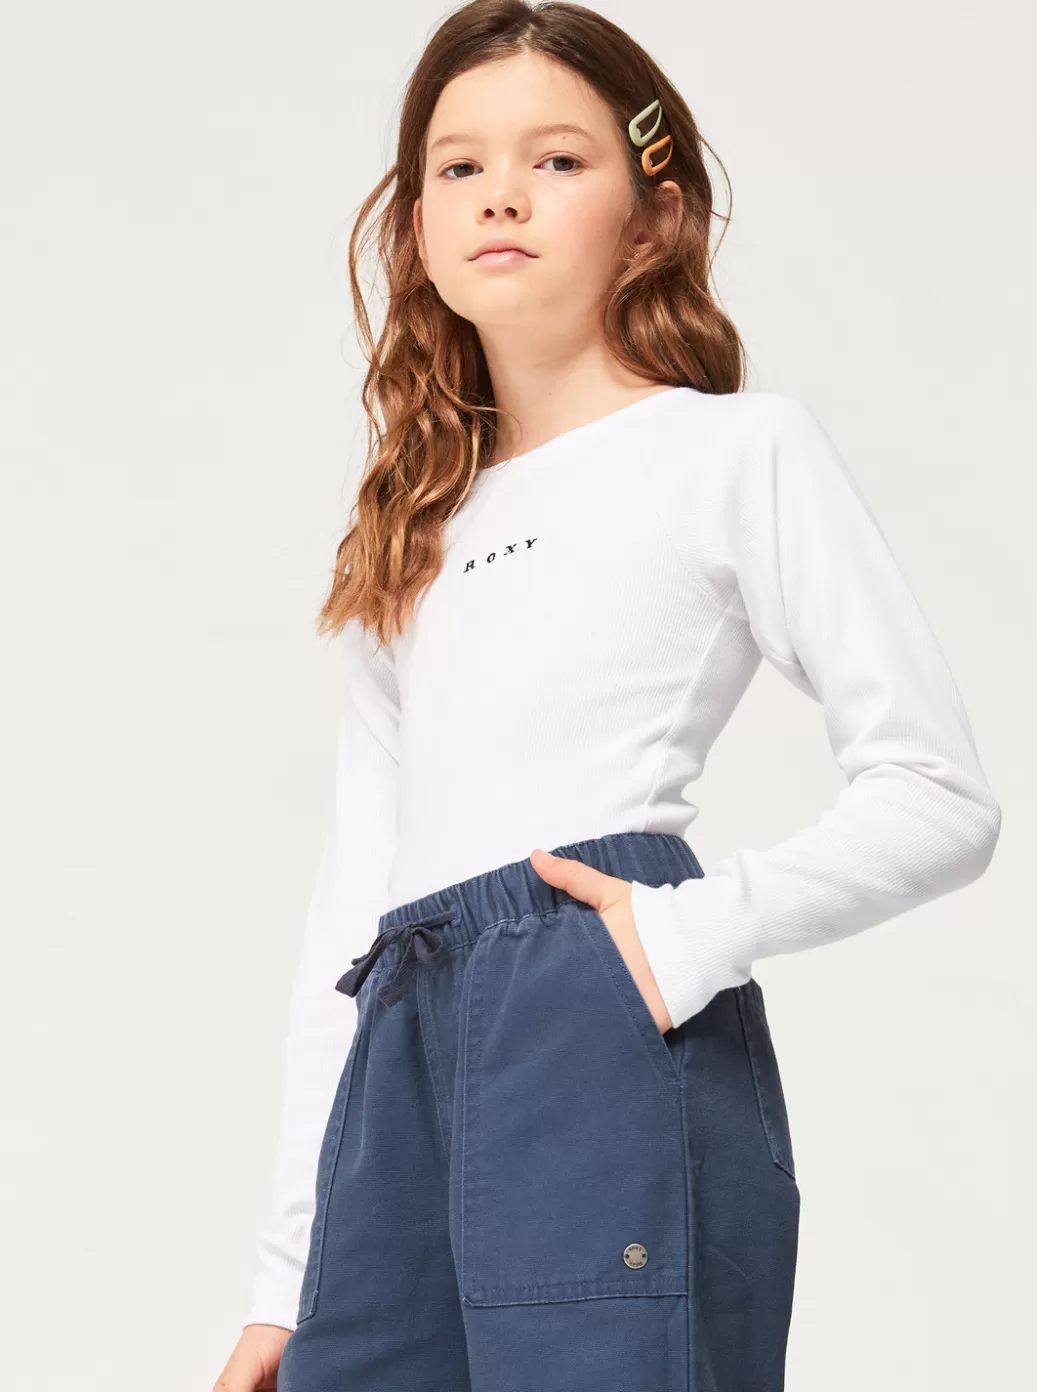 Tees & Tanks | KIDS ROXY Girl's 4-16 Roxify Crls T-Shirt Bright White